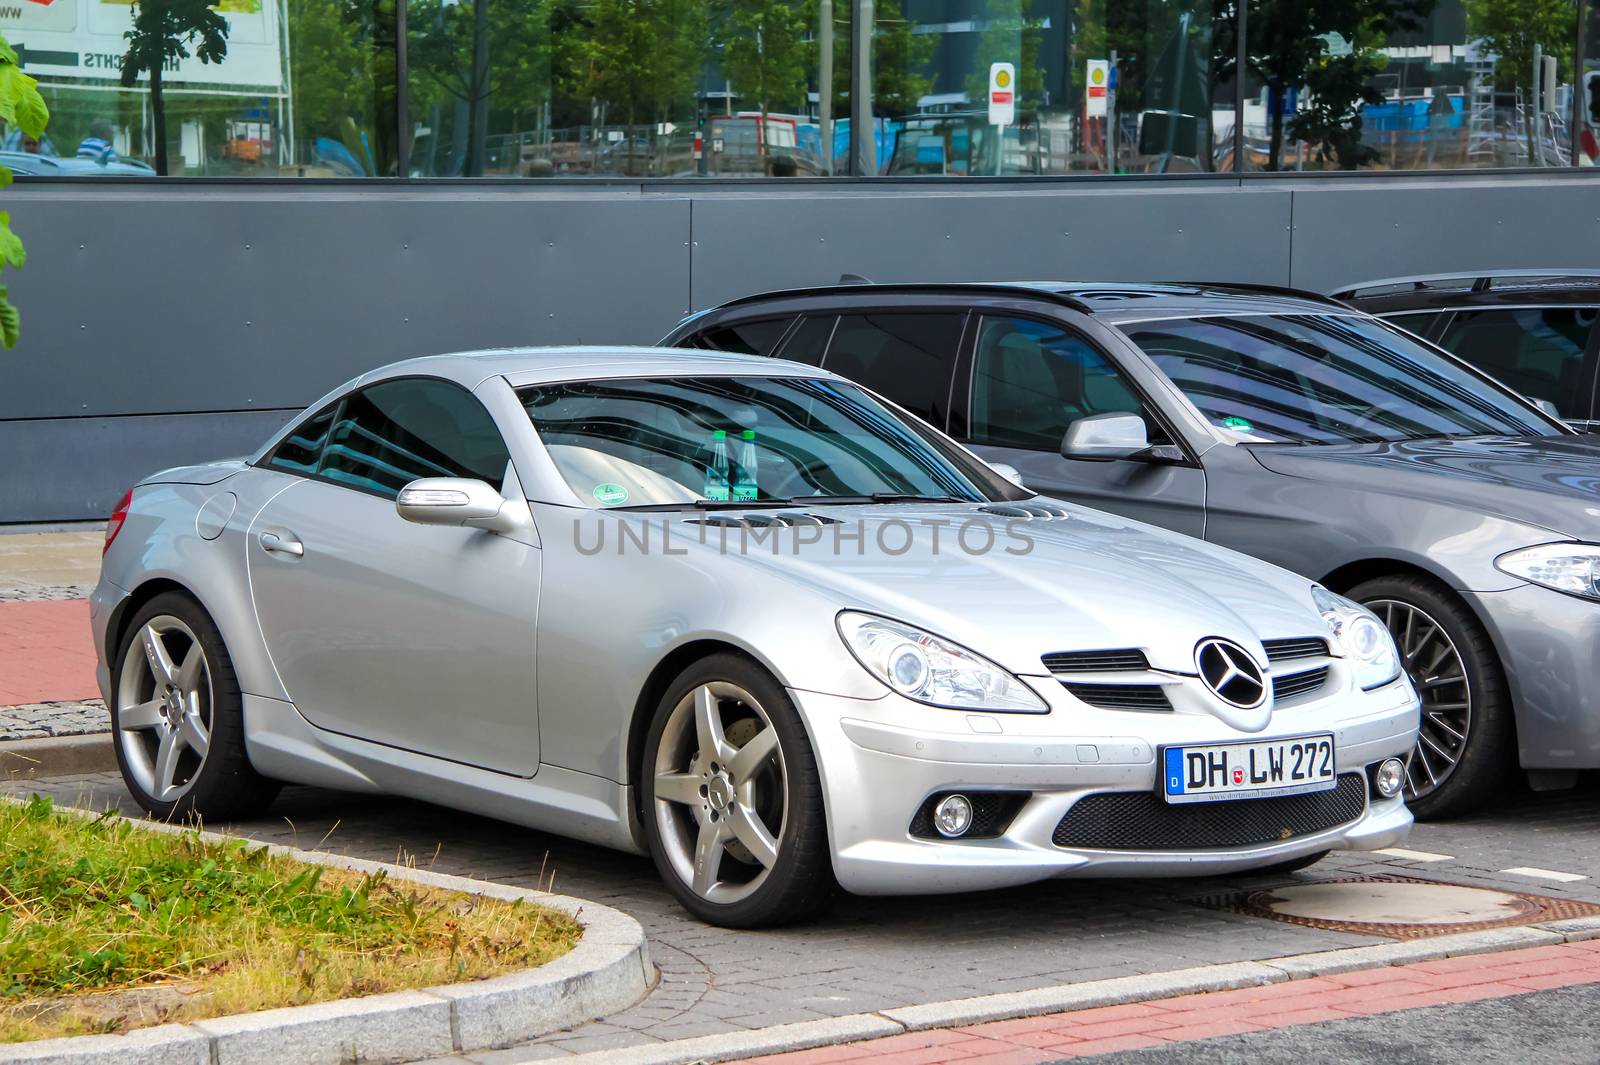 BREMEN, GERMANY - AUGUST 10, 2014: Motor car Mercedes-Benz R171 SLK-class at the city street.